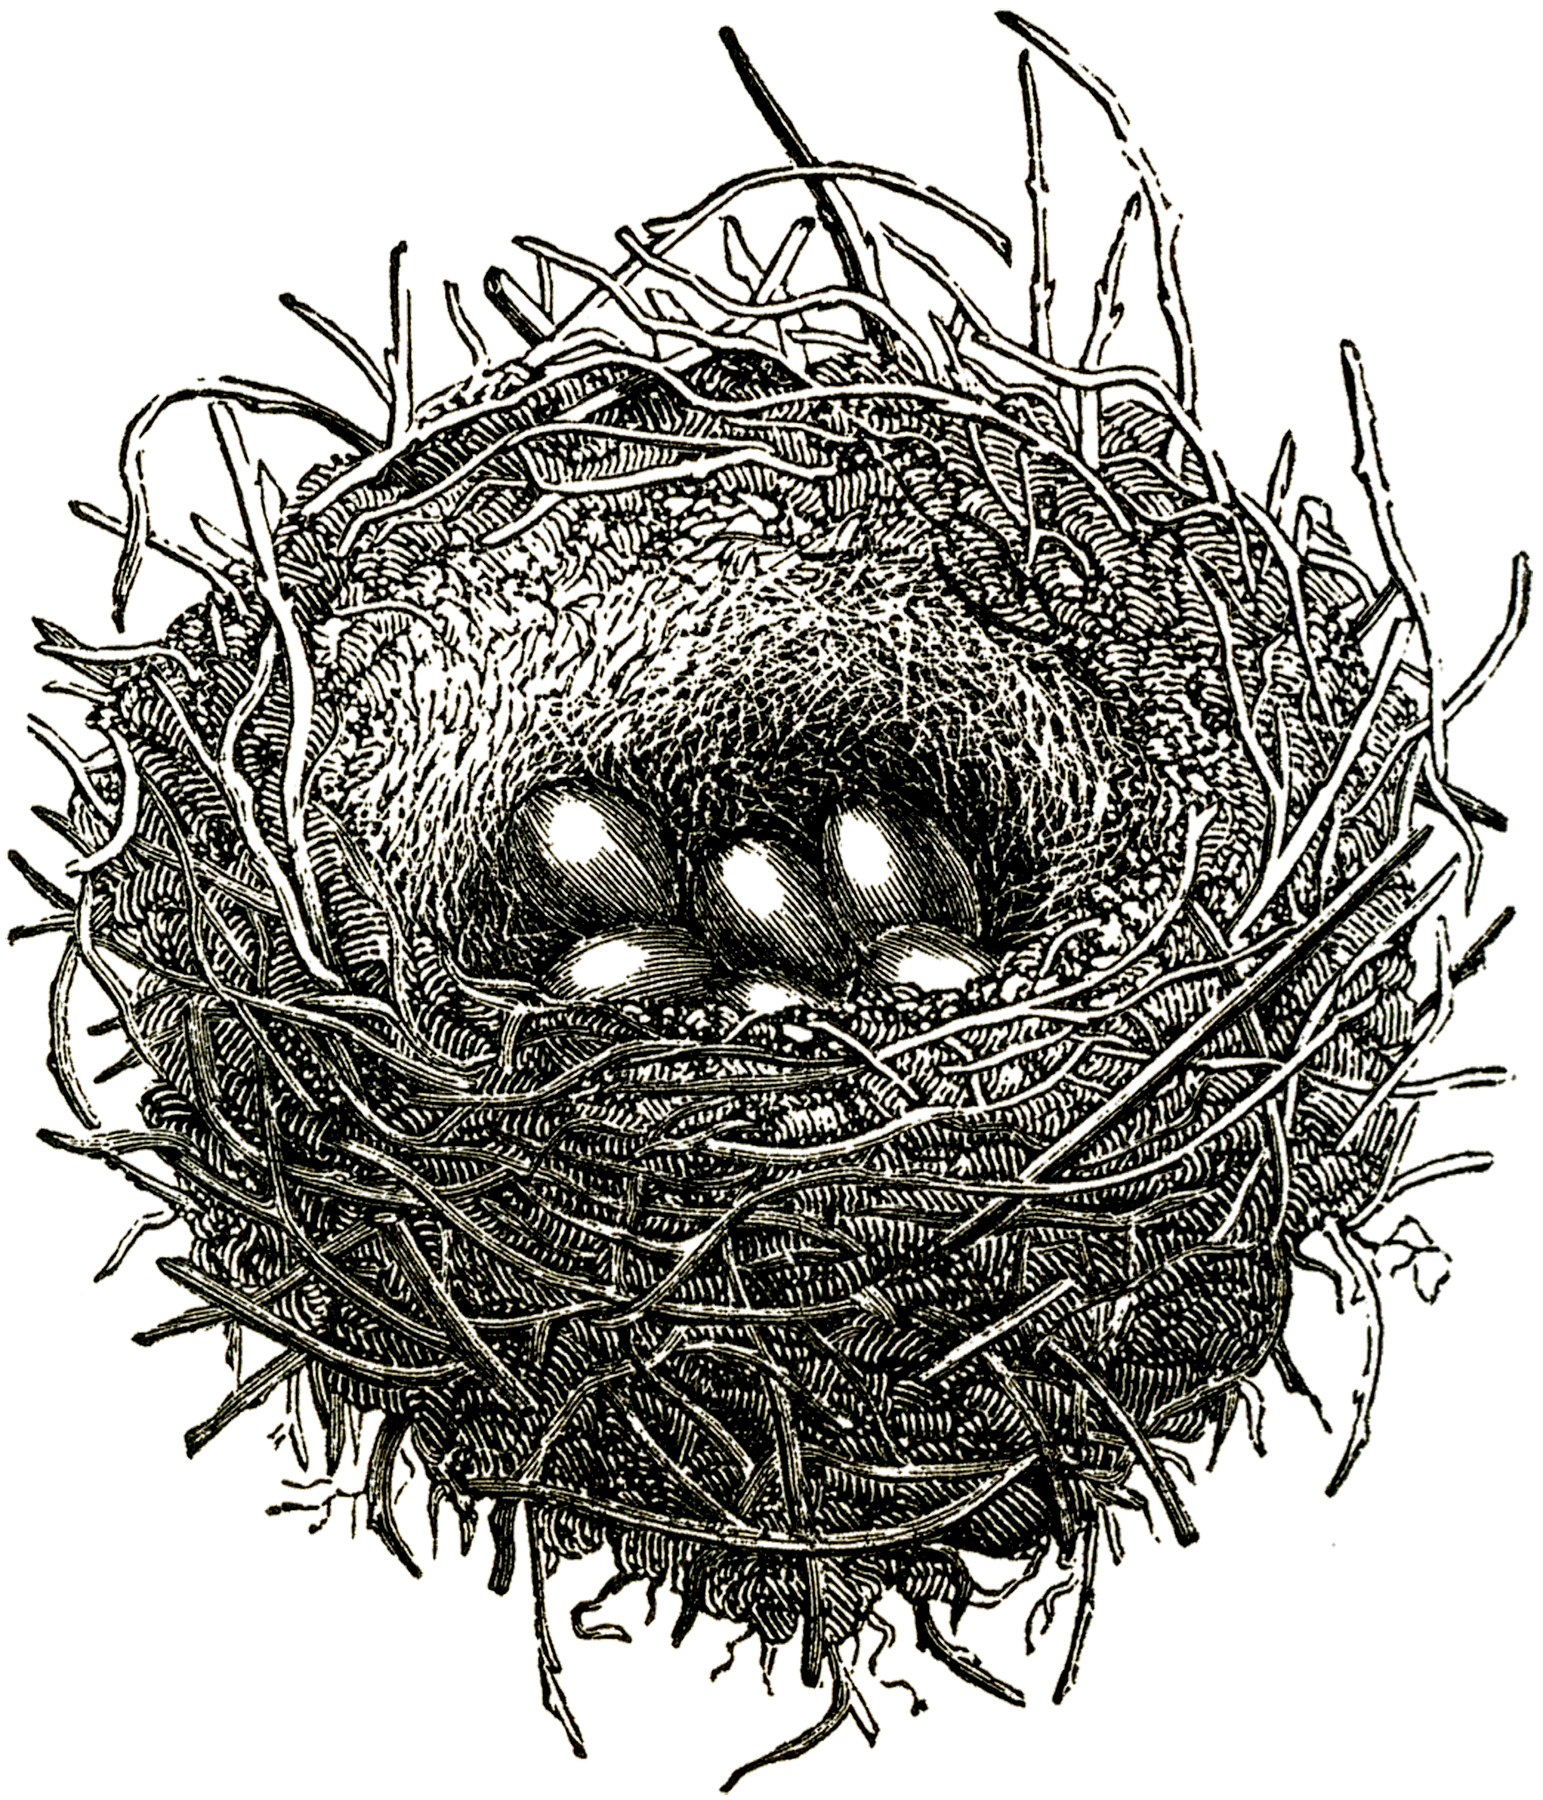 Public-Domain-Bird-Nest-Image-GraphicsFa